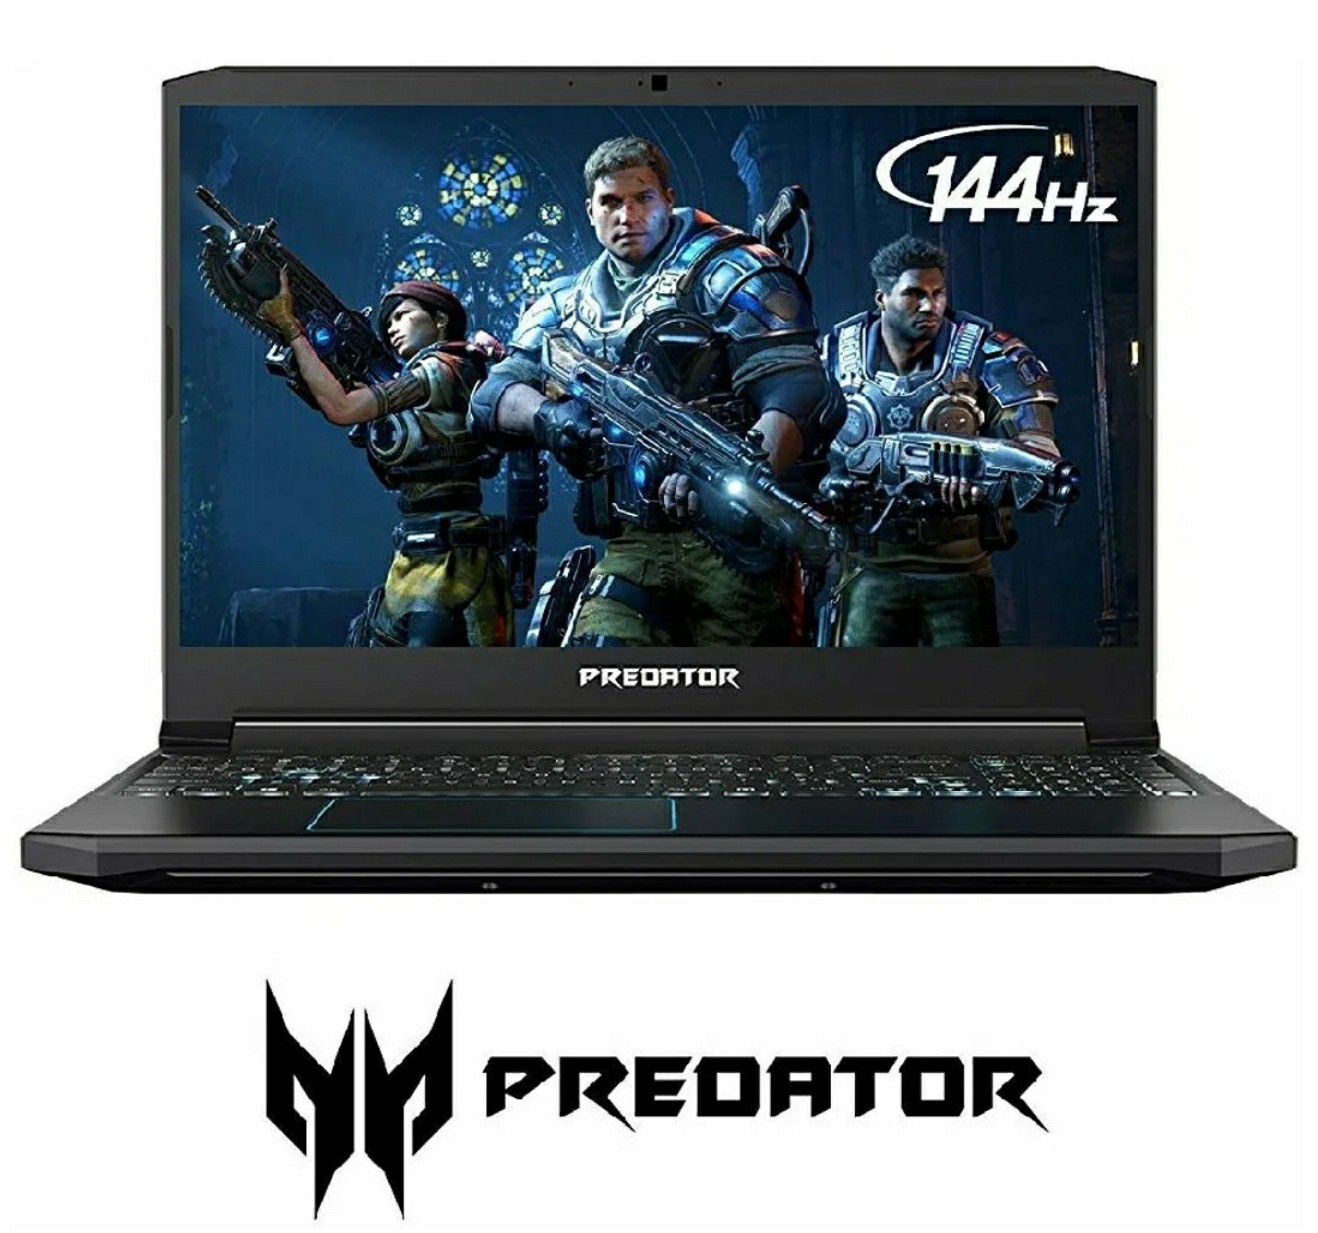 Acer Predator Helios 300 Gaming Laptop PC, 15.6" Full HD 144Hz 3ms IPS Display, Intel i7-9750H